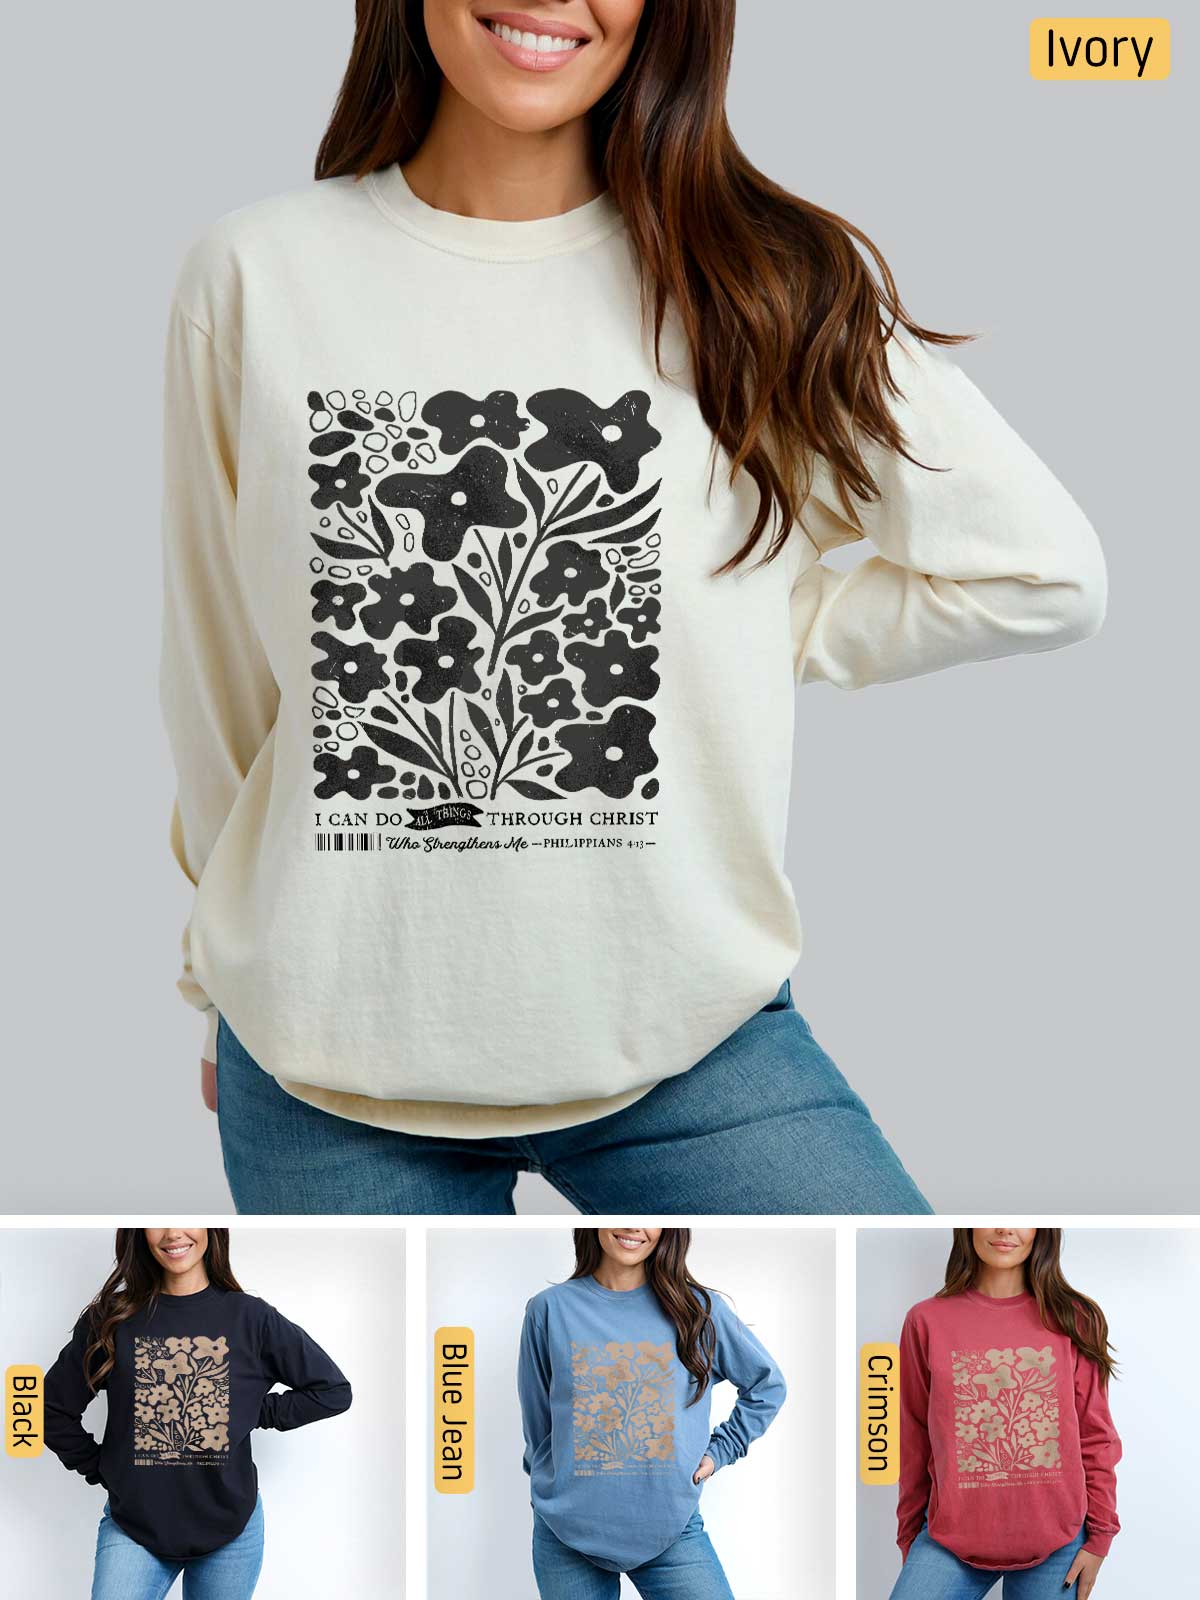 a woman wearing a sweatshirt with a tree on it